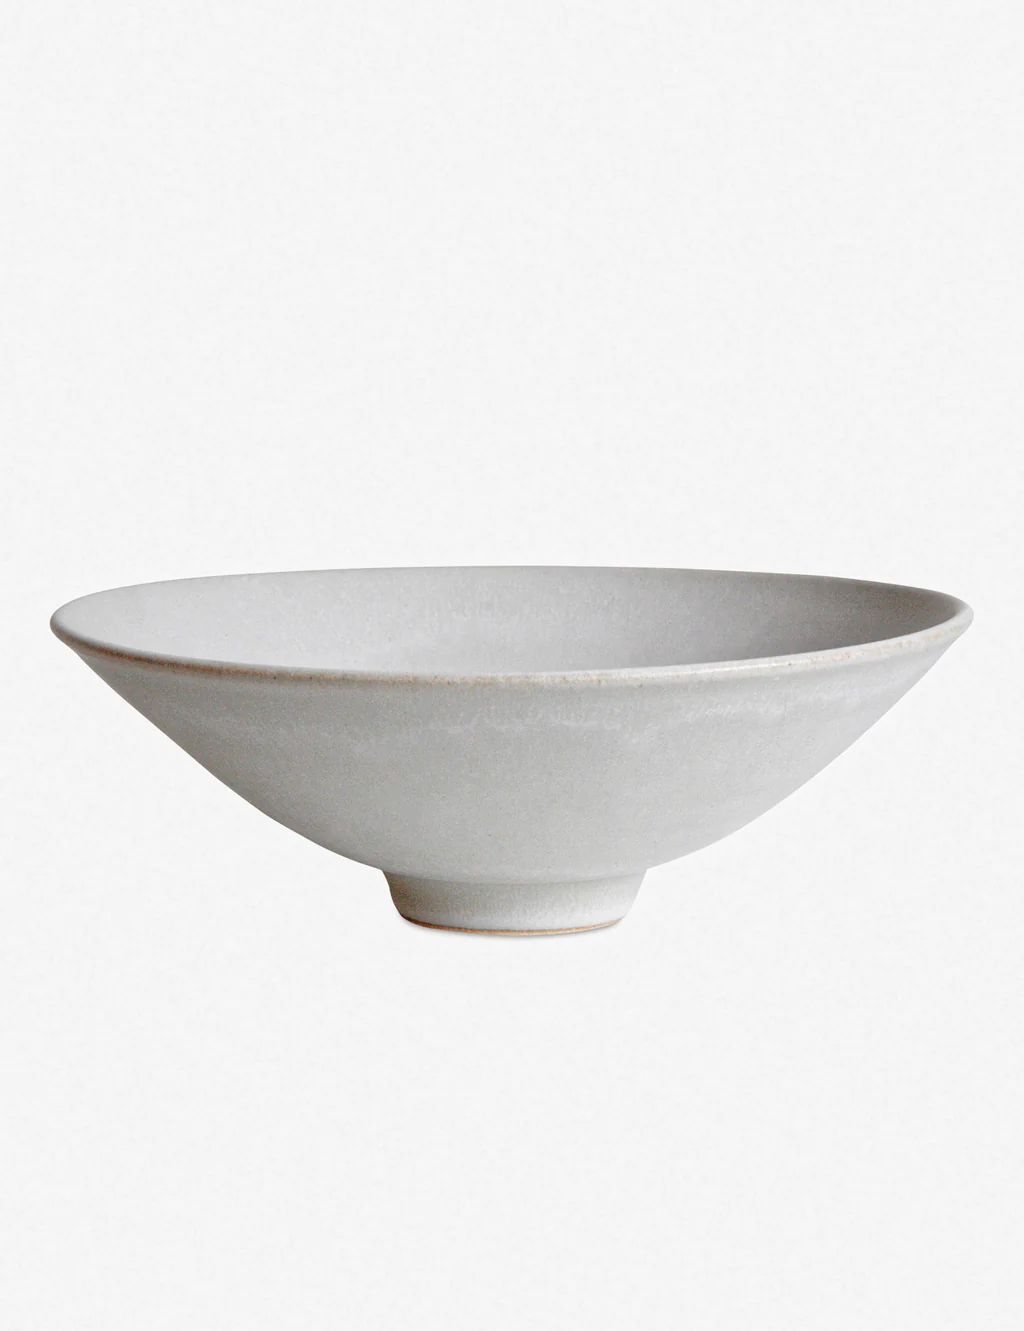 Bestseller
              Sheldon Ceramics Flared Bowl, Stone
              
                
  
 ... | Lulu and Georgia 